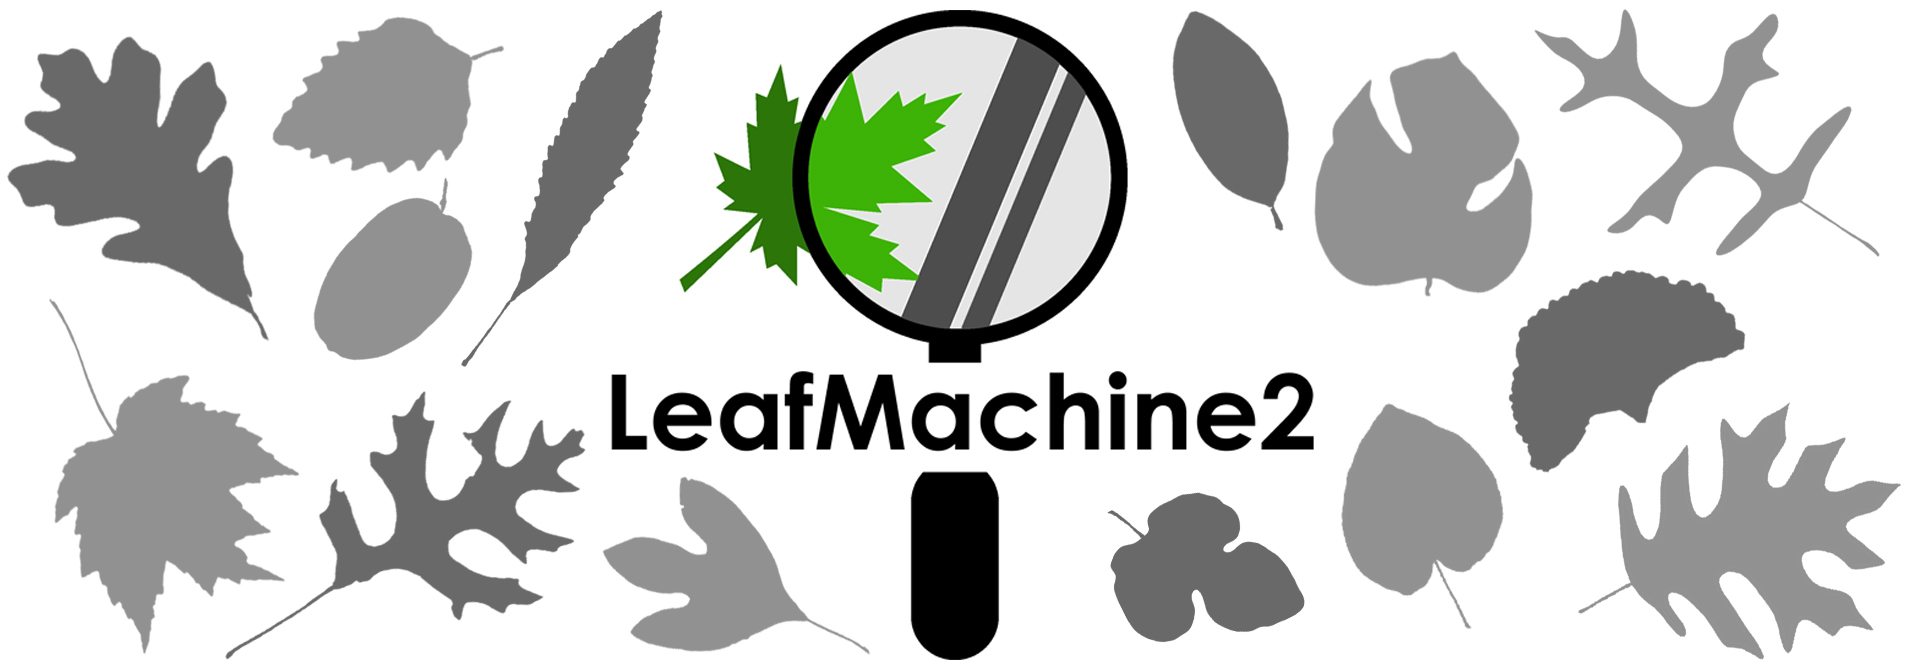 LeafMachine Image